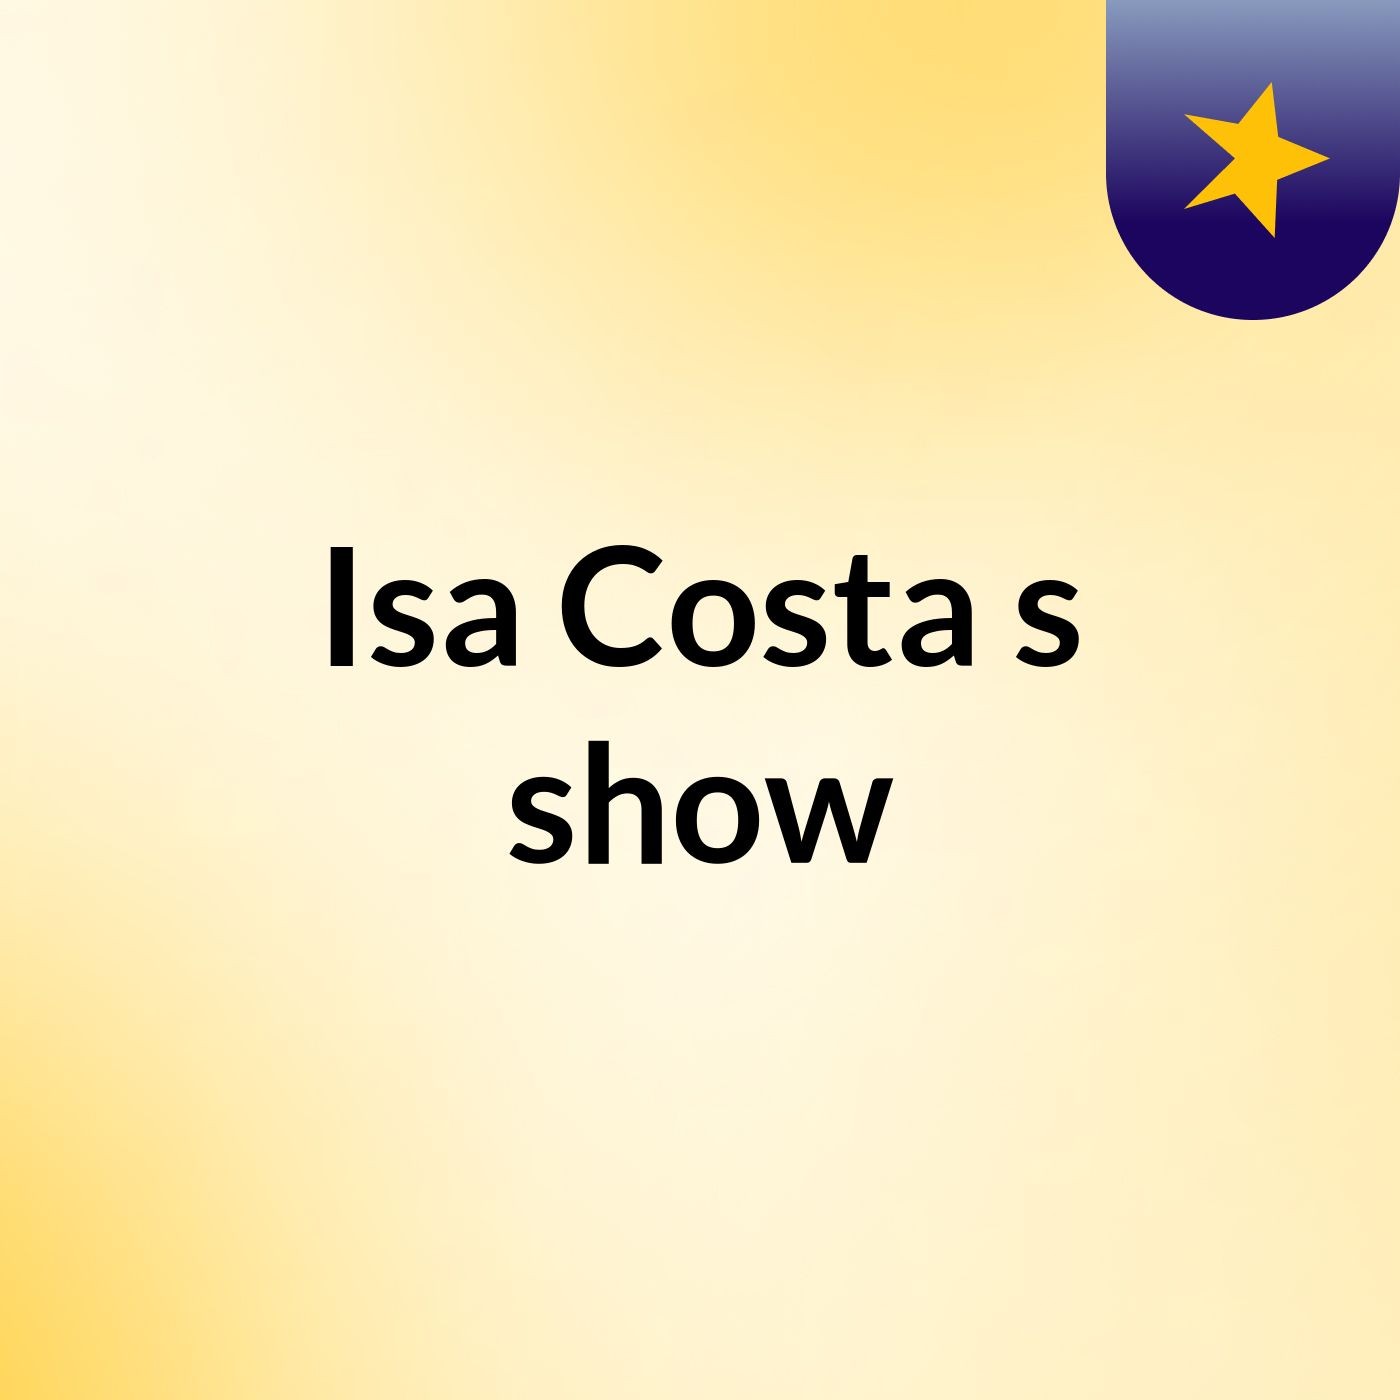 Isa Costa's show